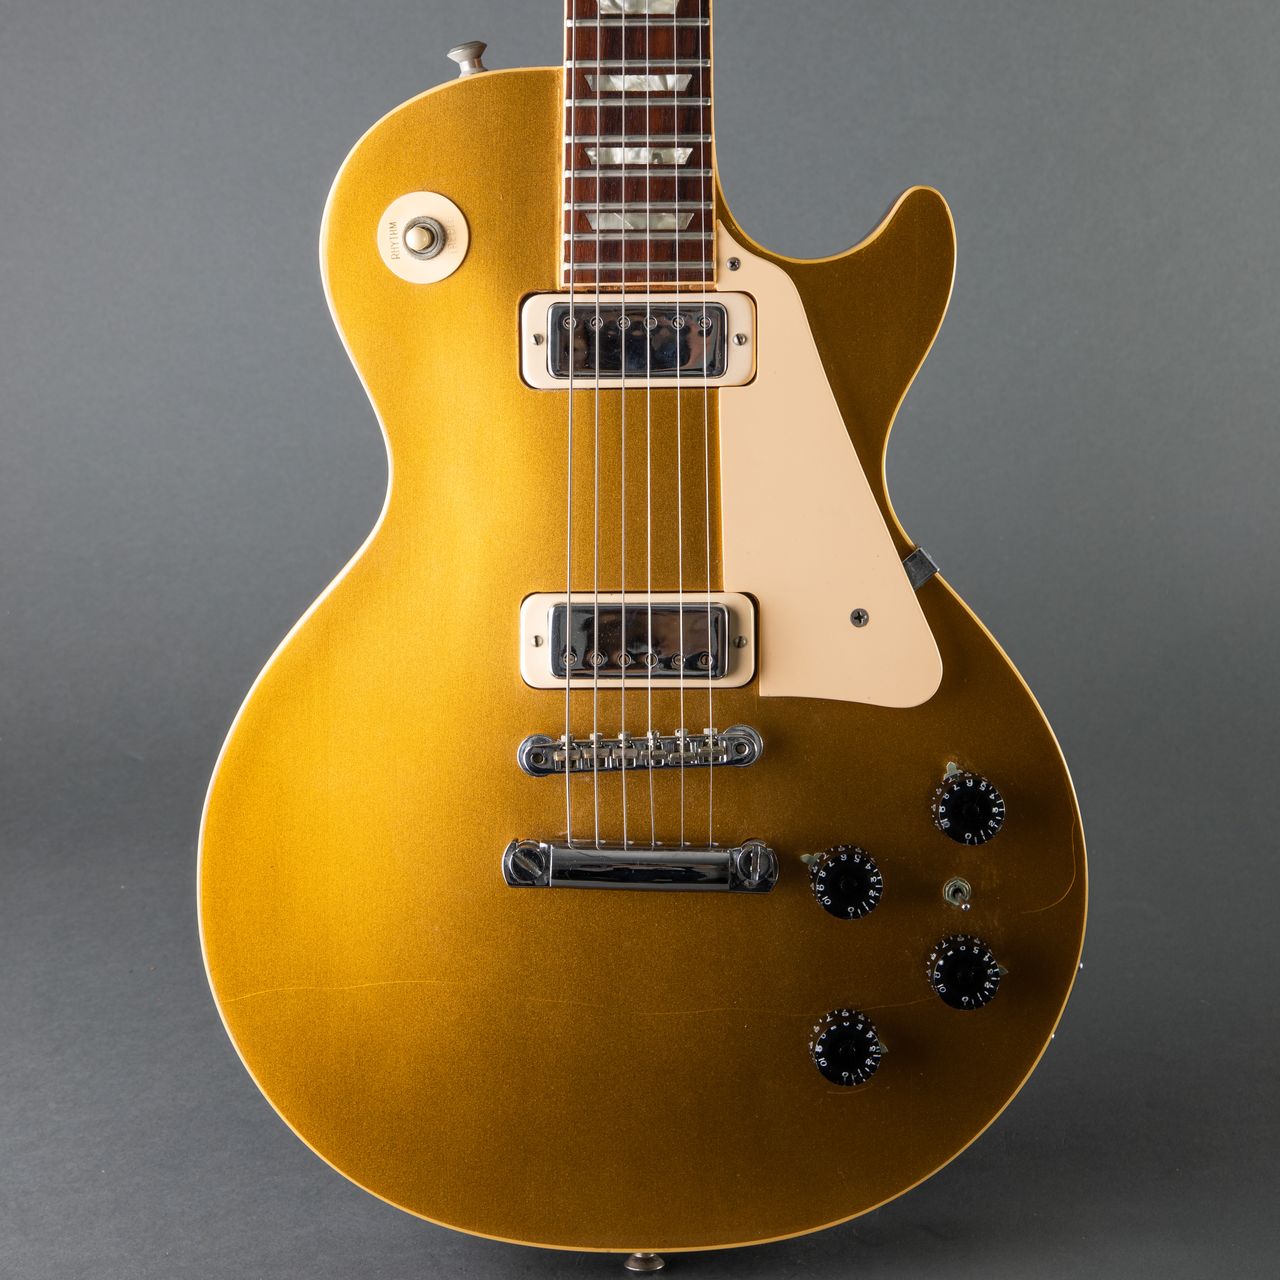 Slink Morning hotel Gibson Les Paul Deluxe 1970, Goldtop | Carter Vintage Guitars